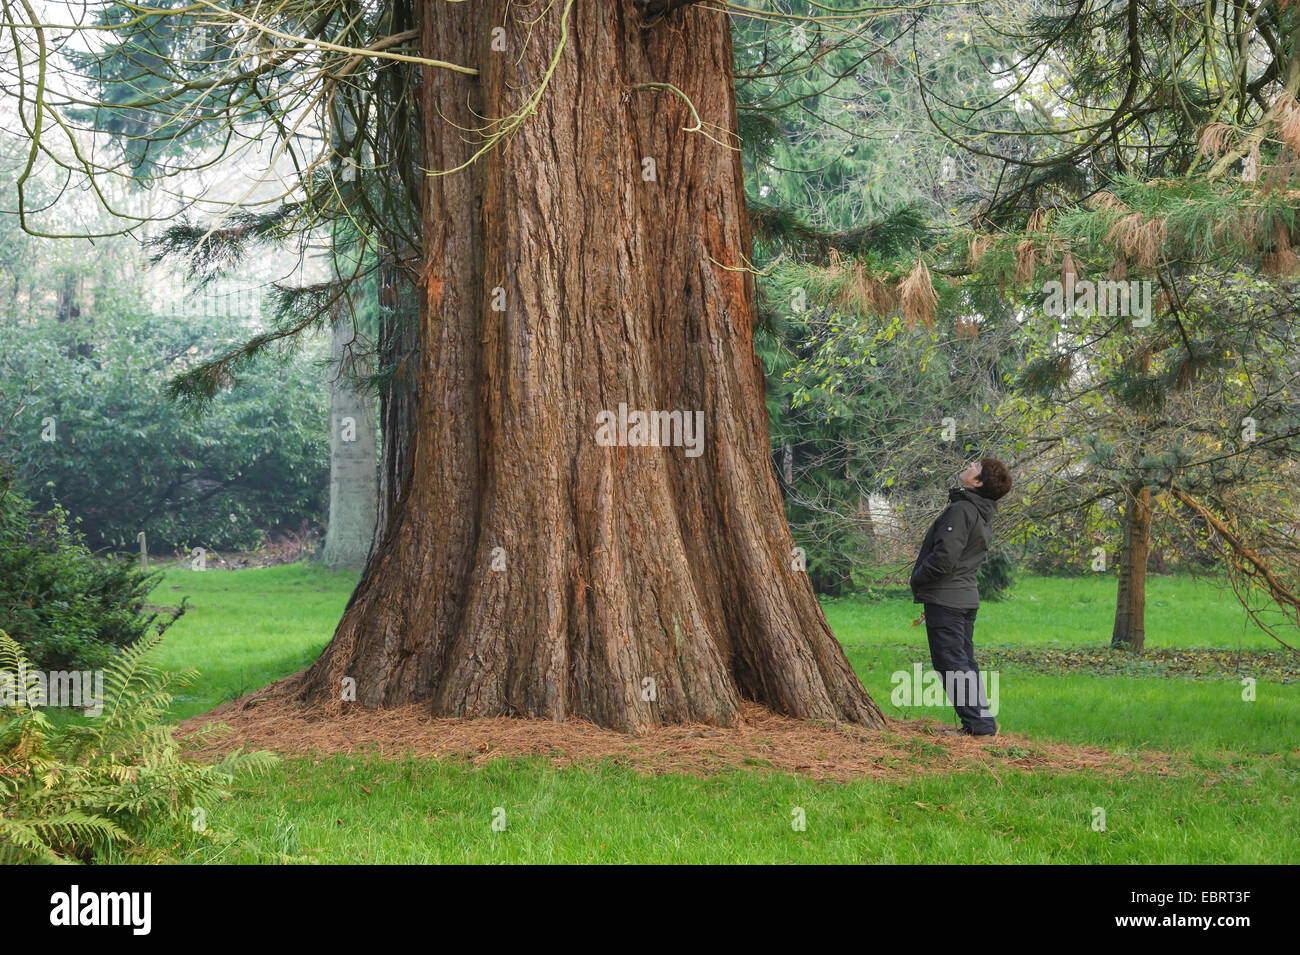 giant sequoia, giant redwood (Sequoiadendron giganteum), woman looking up a tree trunk, Germany, Mecklenburg-Western Pomerania Stock Photo